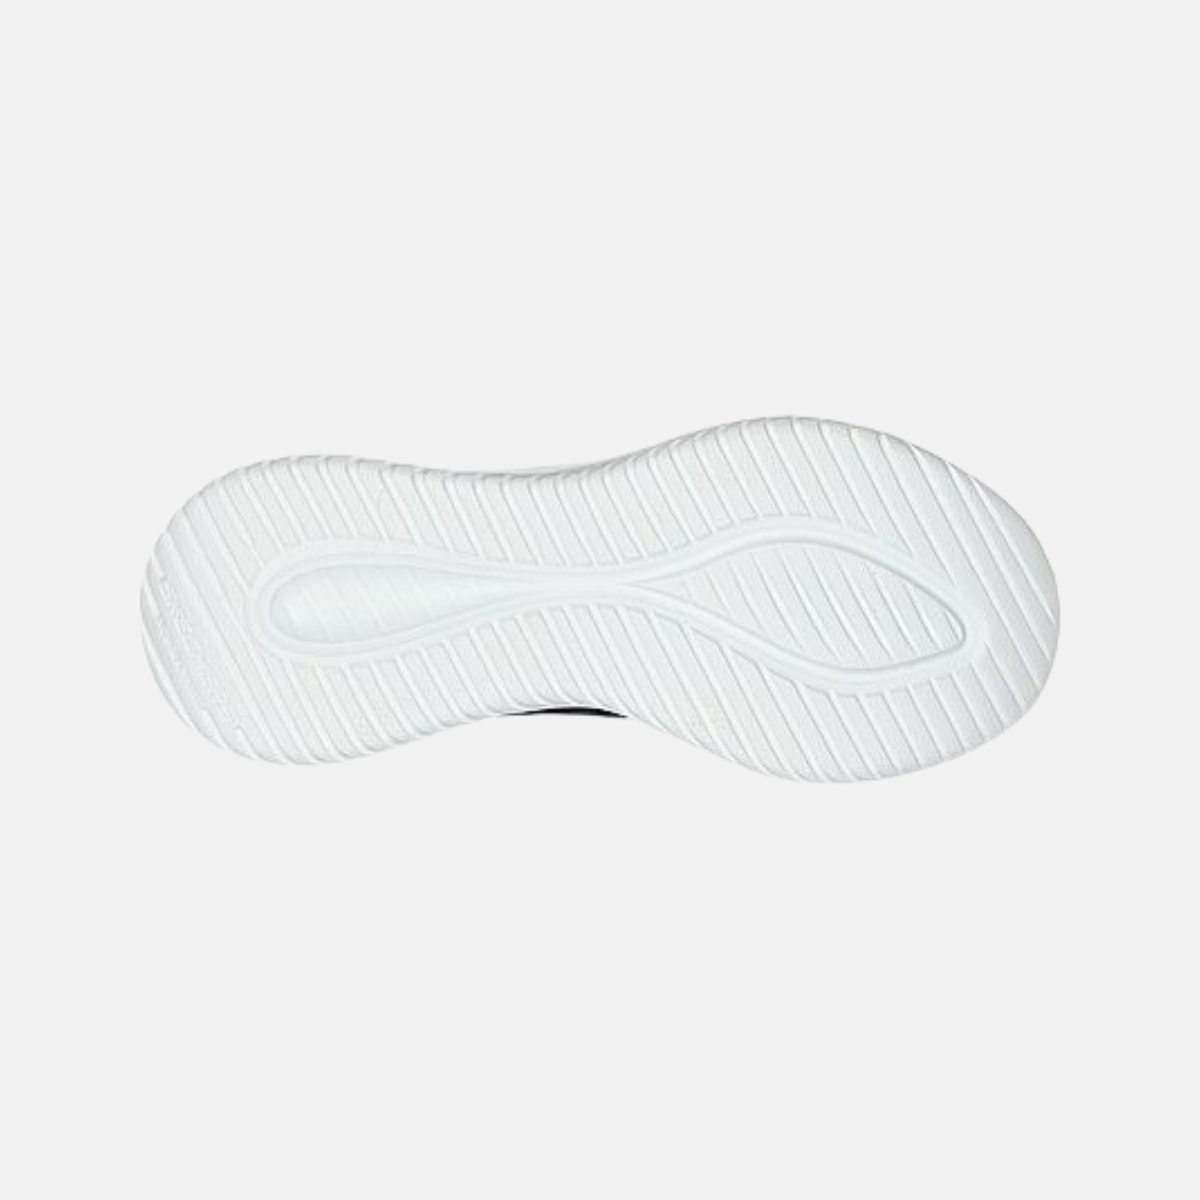 Skechers Slip-Ins Ultra Flex 3.0 Fresh Time -Black/Pink